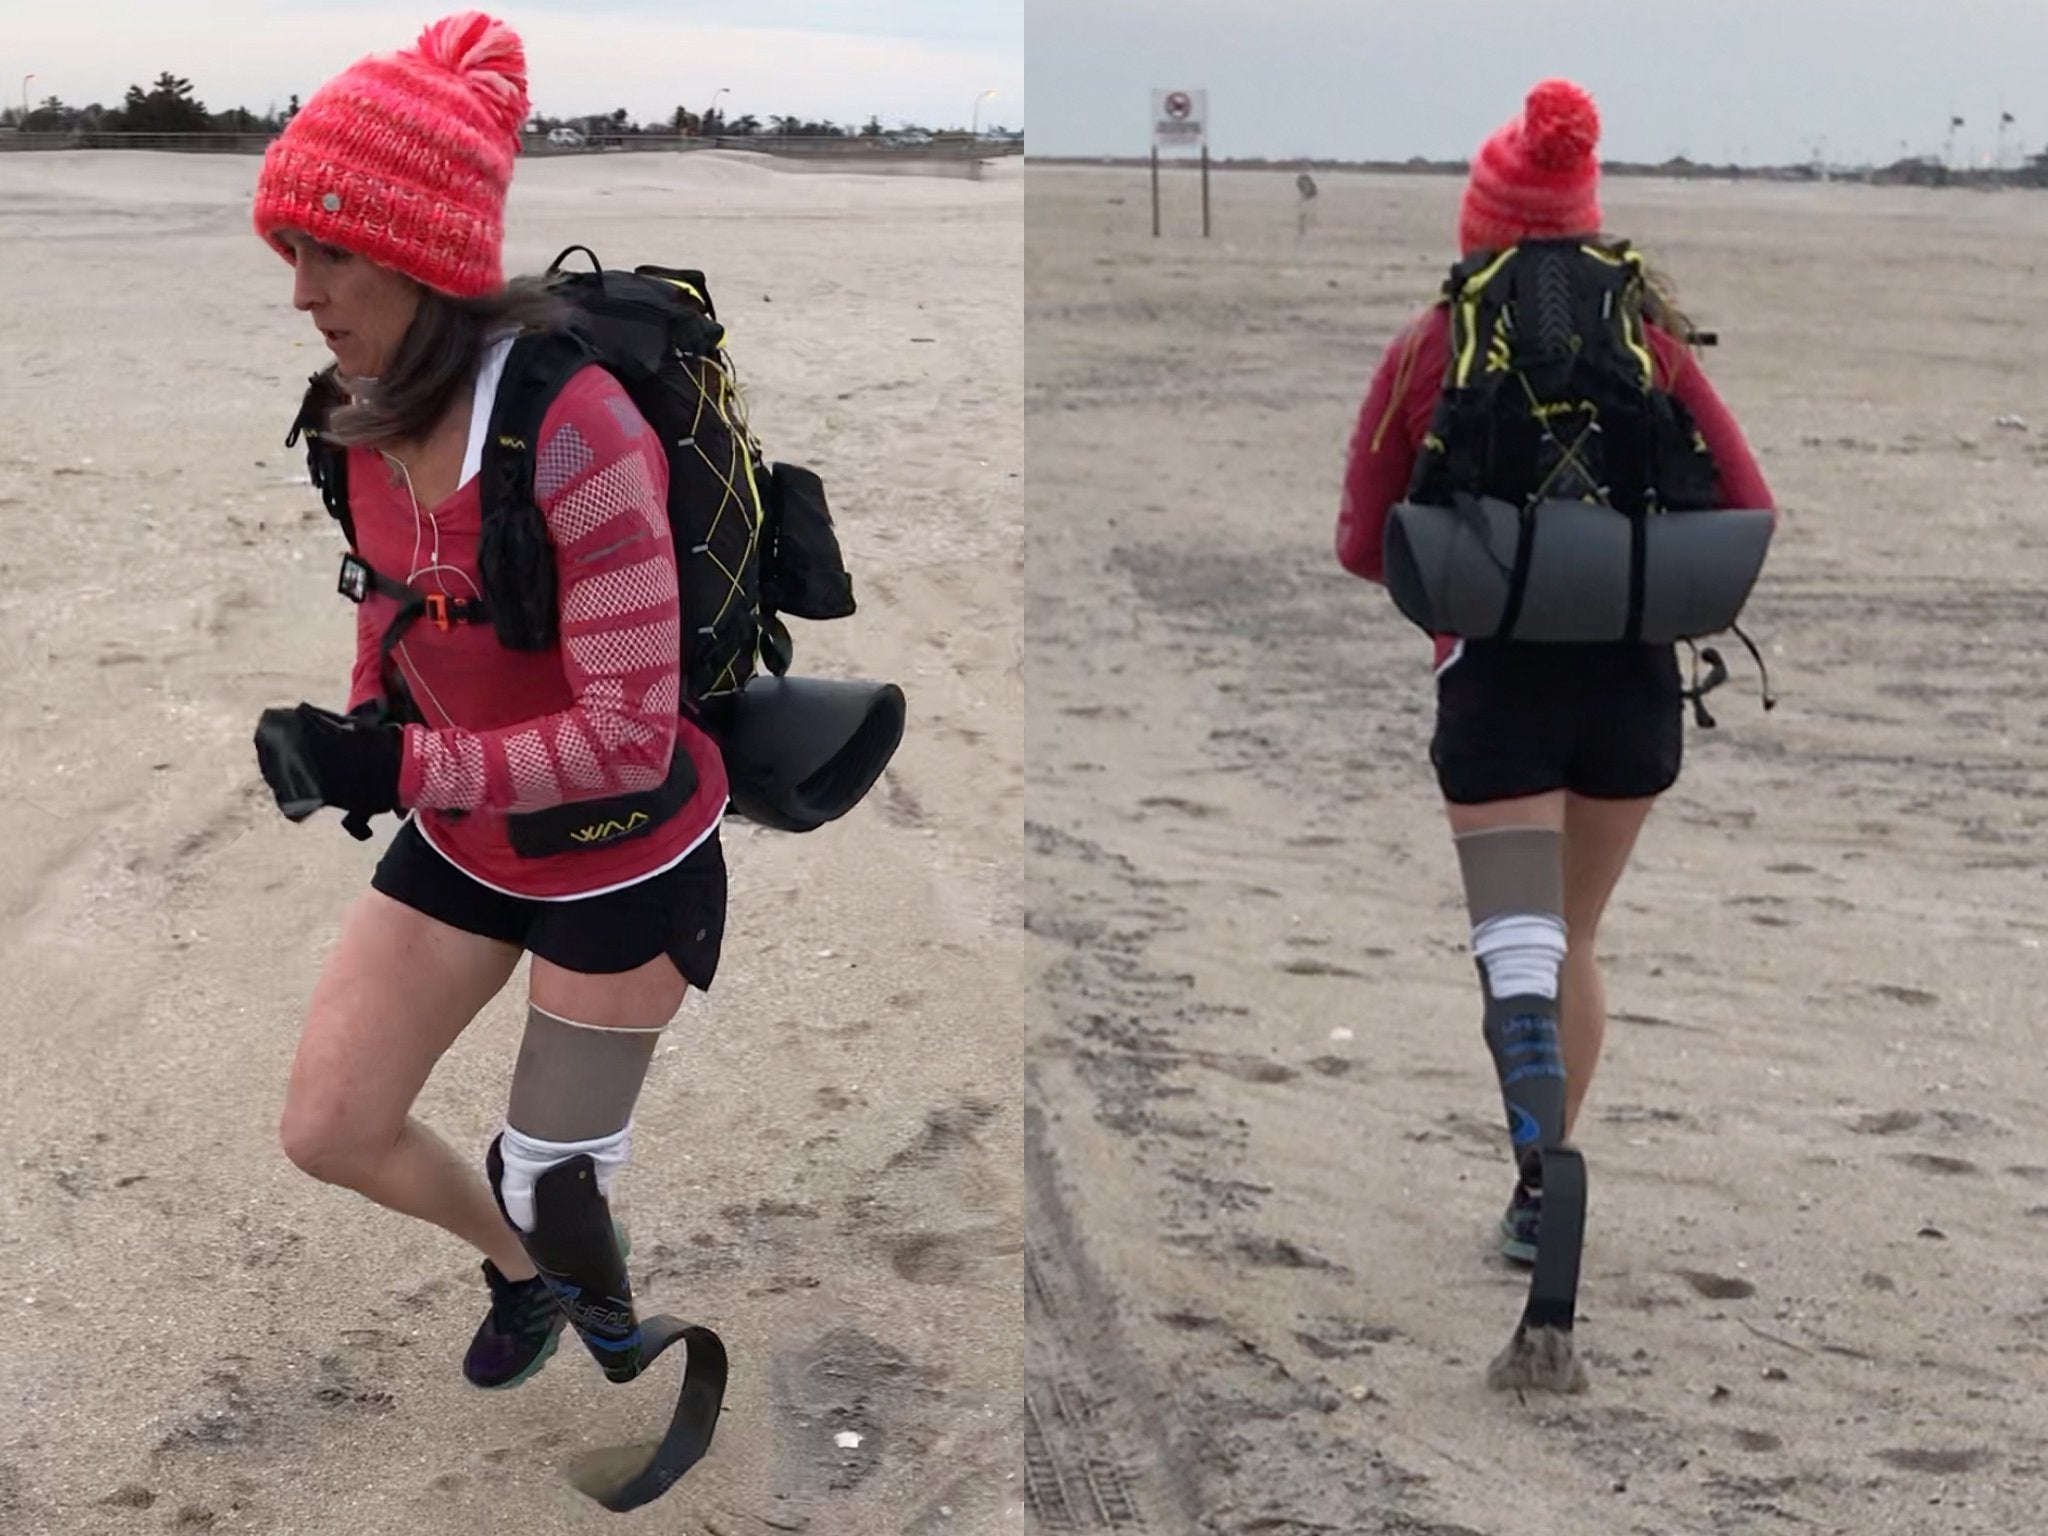 Palmiero-Winters tests her prosthetic leg in sand on Jones Beach in New York